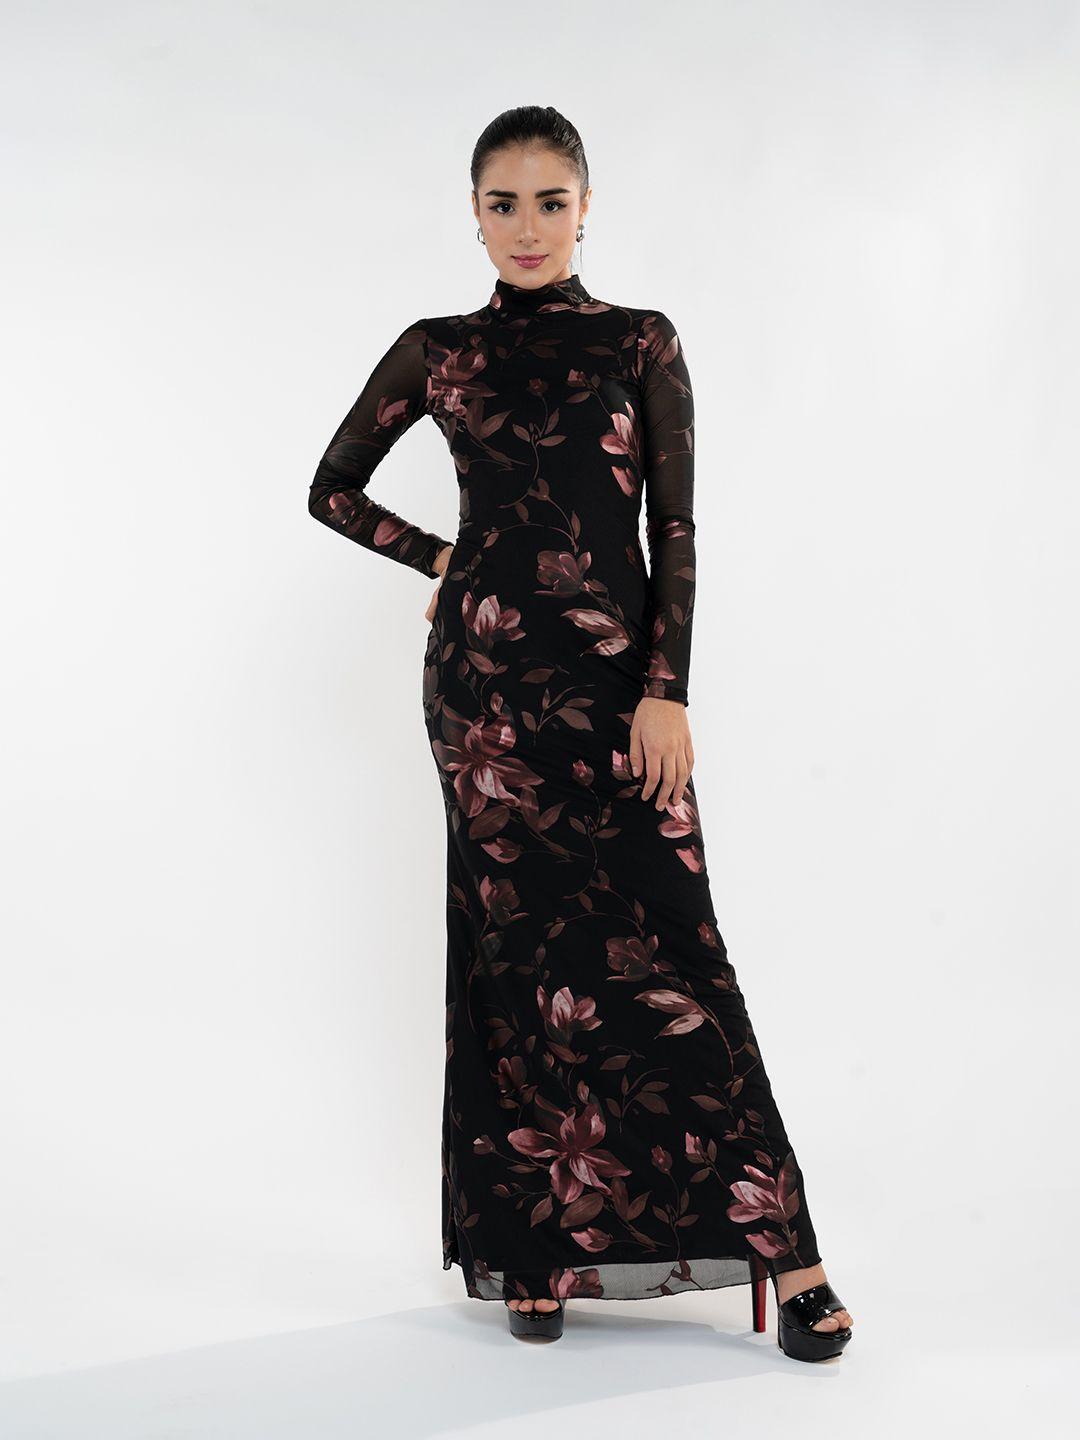 stylecast x hersheinbox high-neck floral print maxi dress